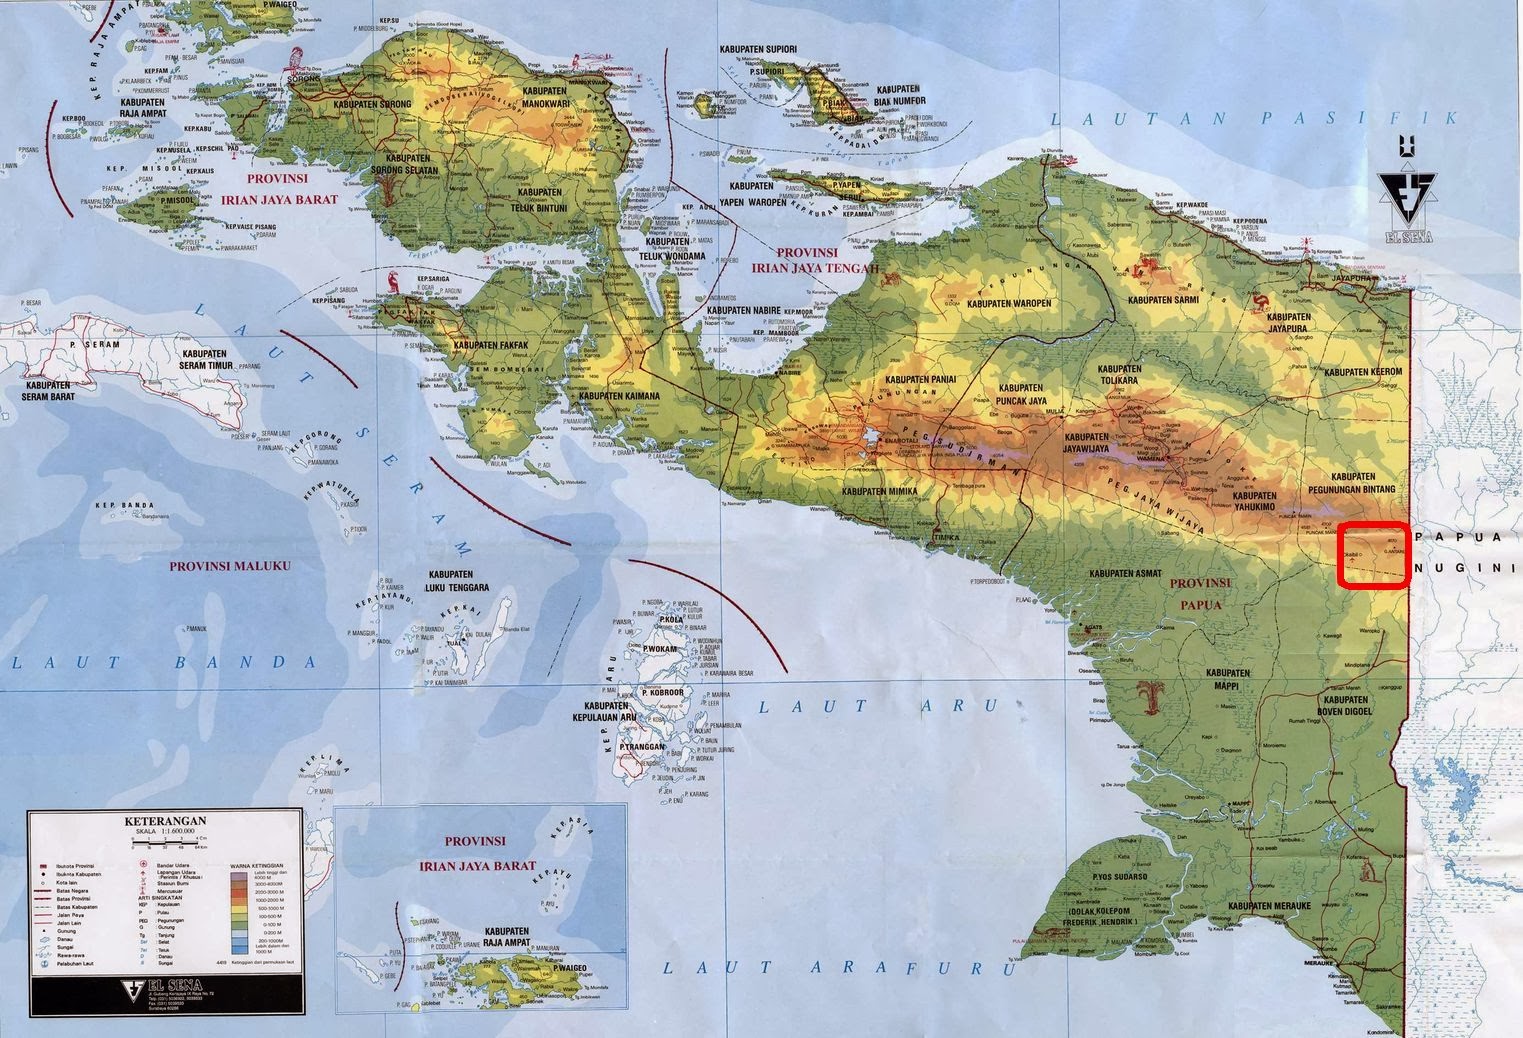 Peta Papua